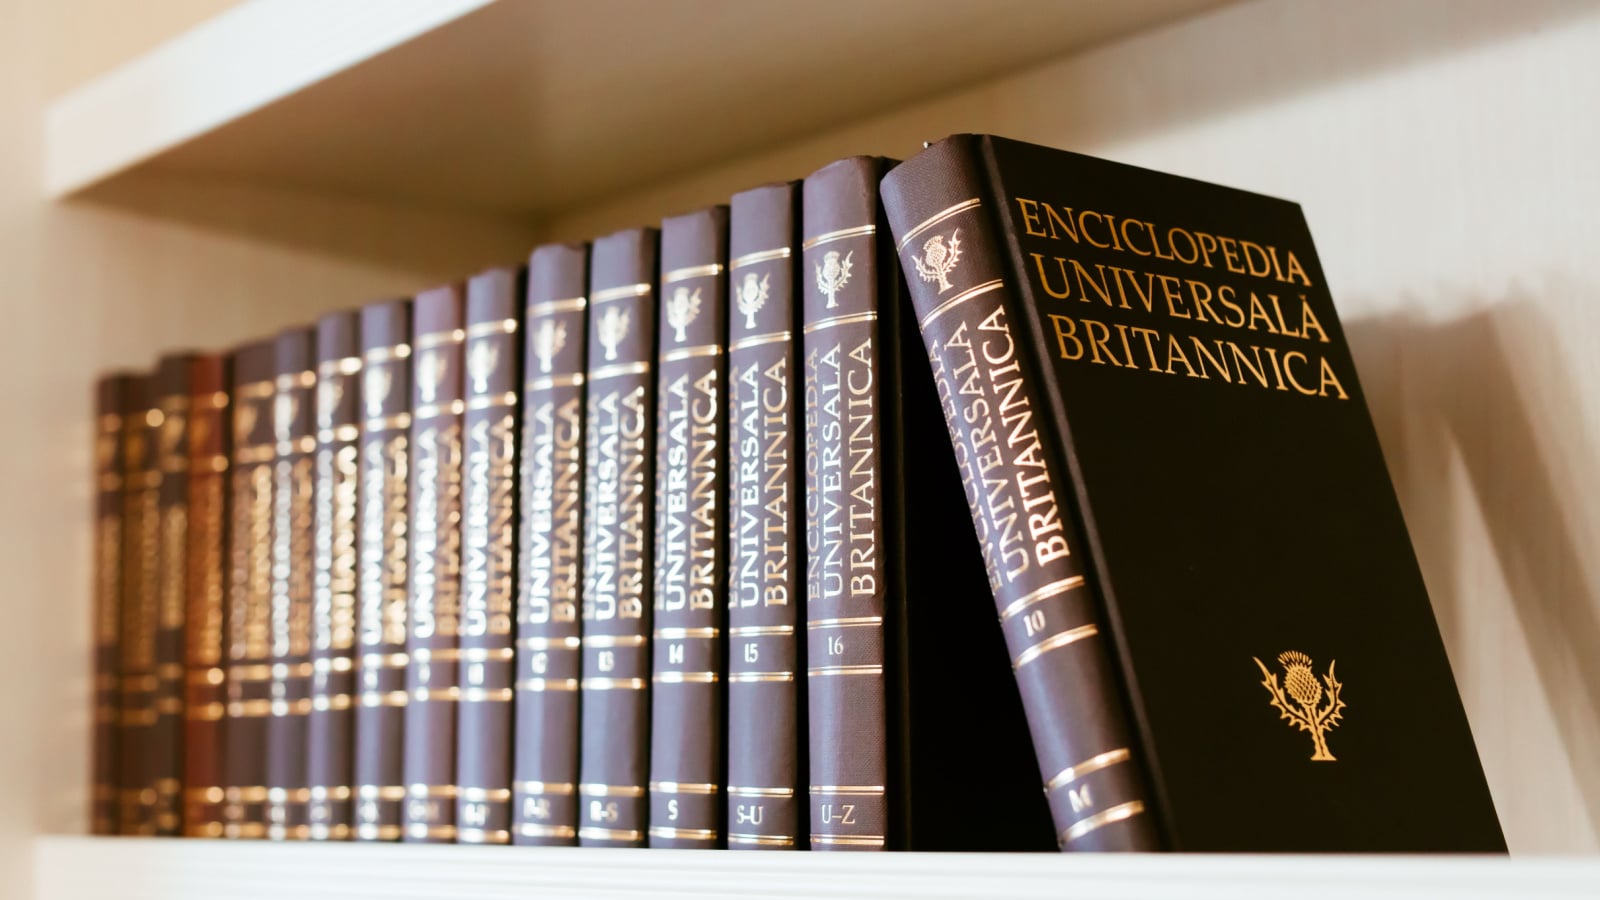 Chisinau, Moldova - March 2019: Encyclopedia Britannica - Complete stack of "Enciclopedia Universală Britanica" composed of 16 volumes in romanian language.